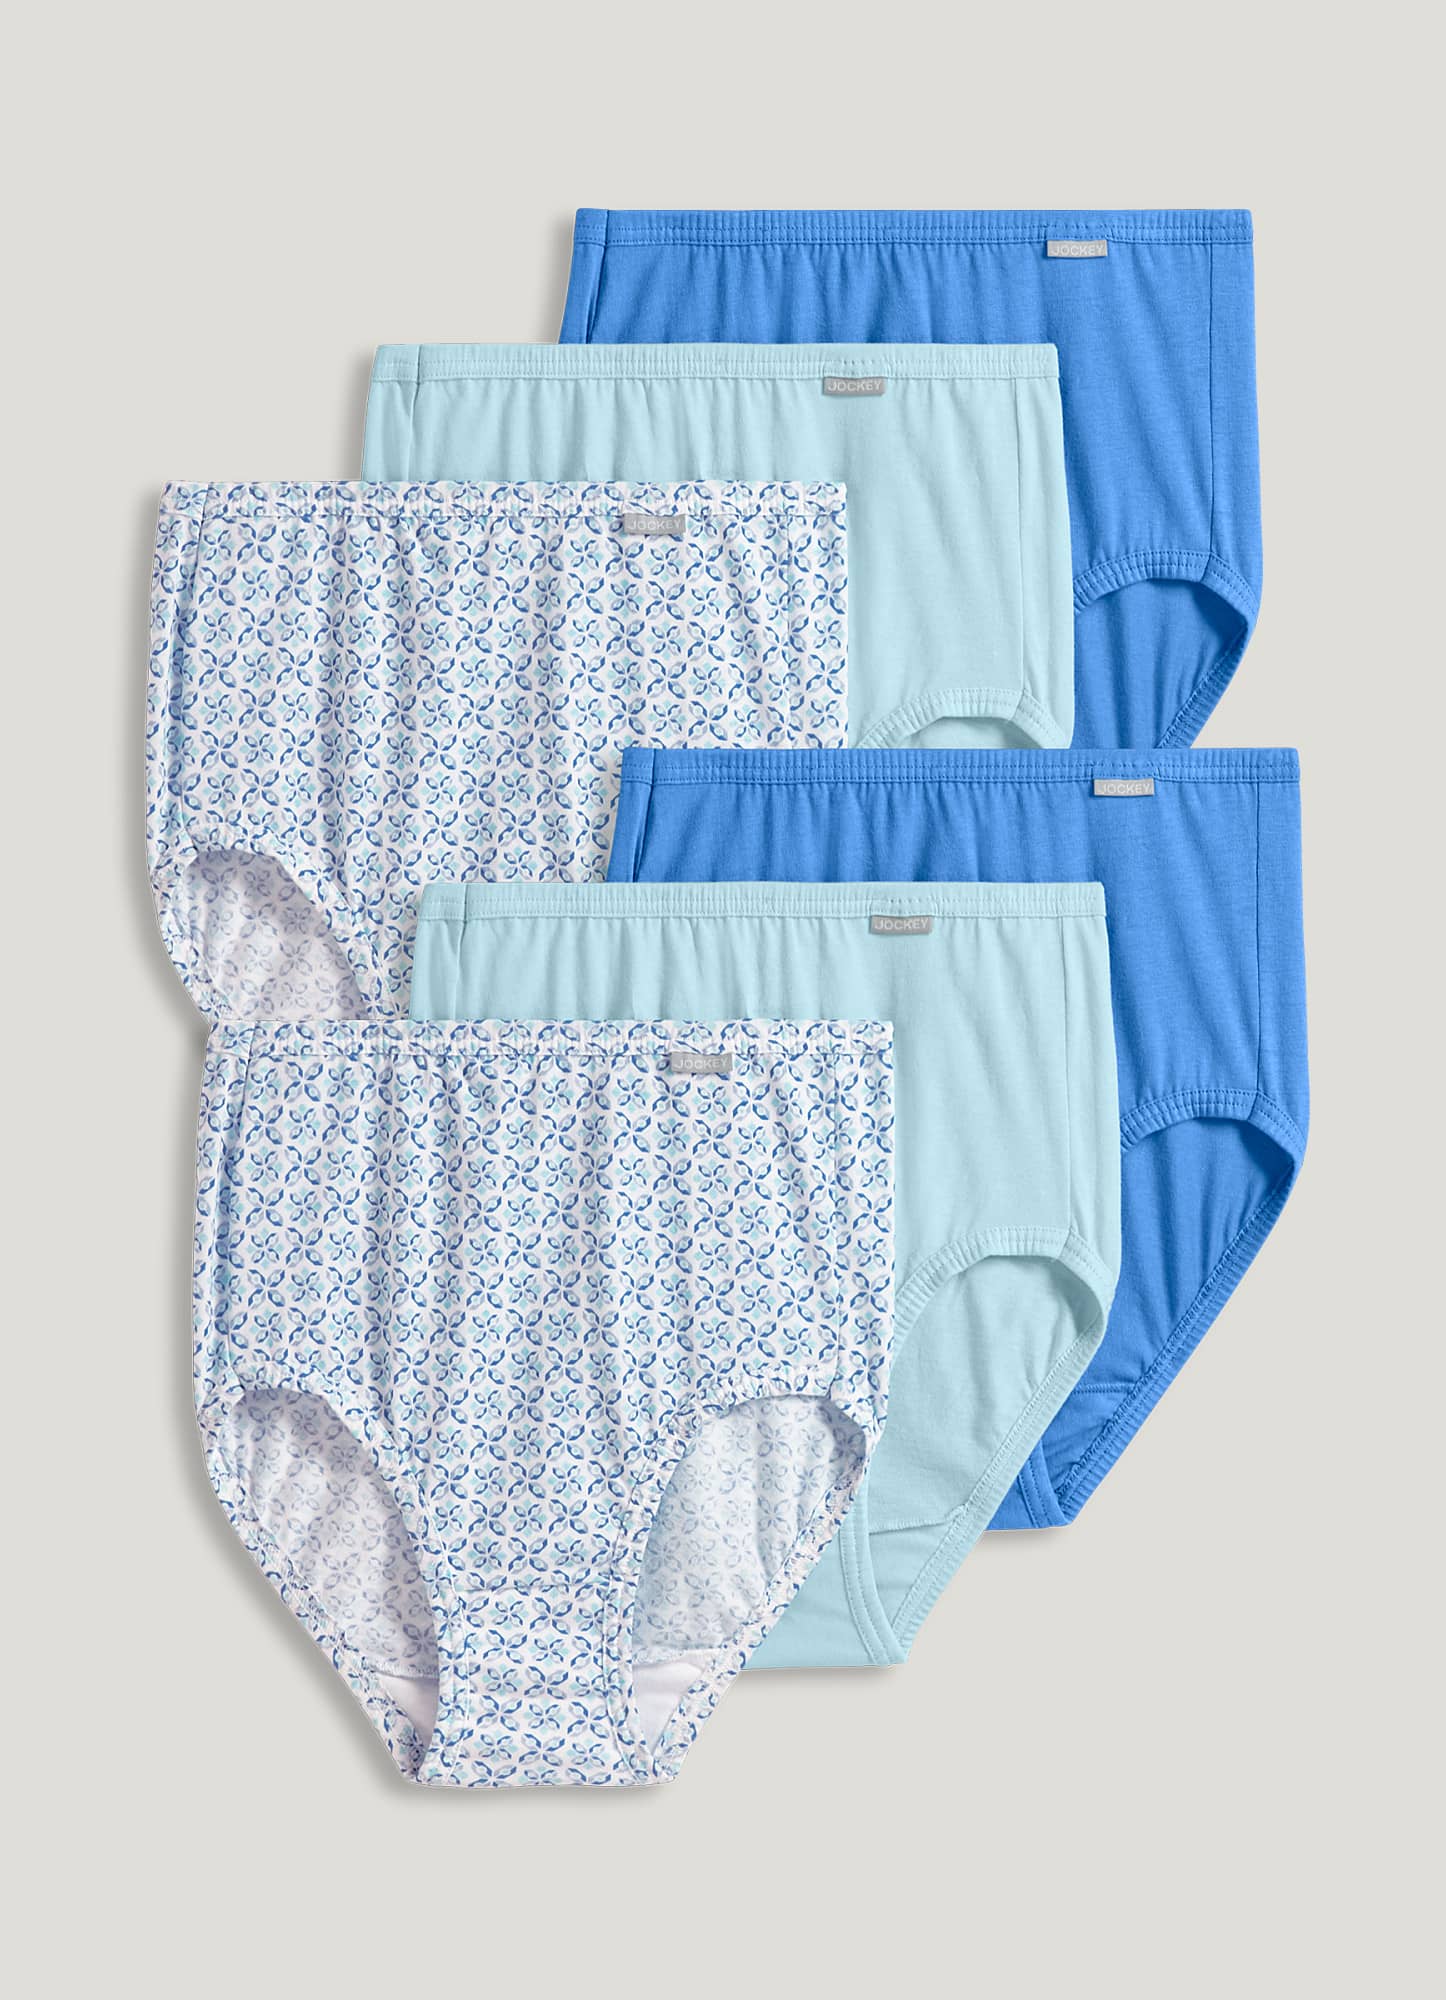 100% Cotton Panties for Women Ladies Underwear - China Bra and Mix Designs  price